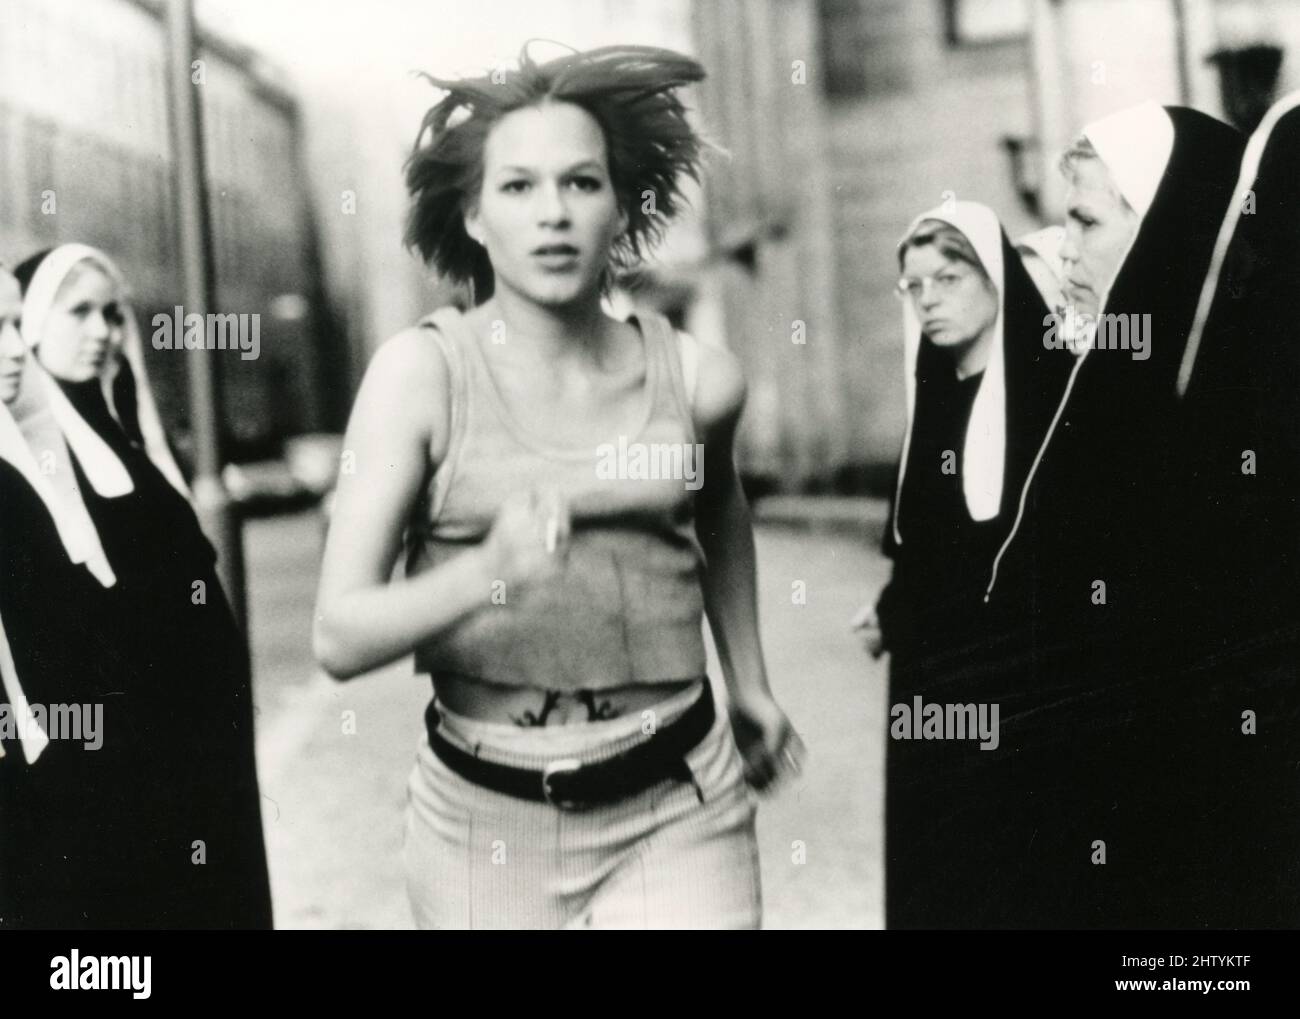 German actress Franka Potente in the movie Lola Rennt, Germany 1998 Stock Photo